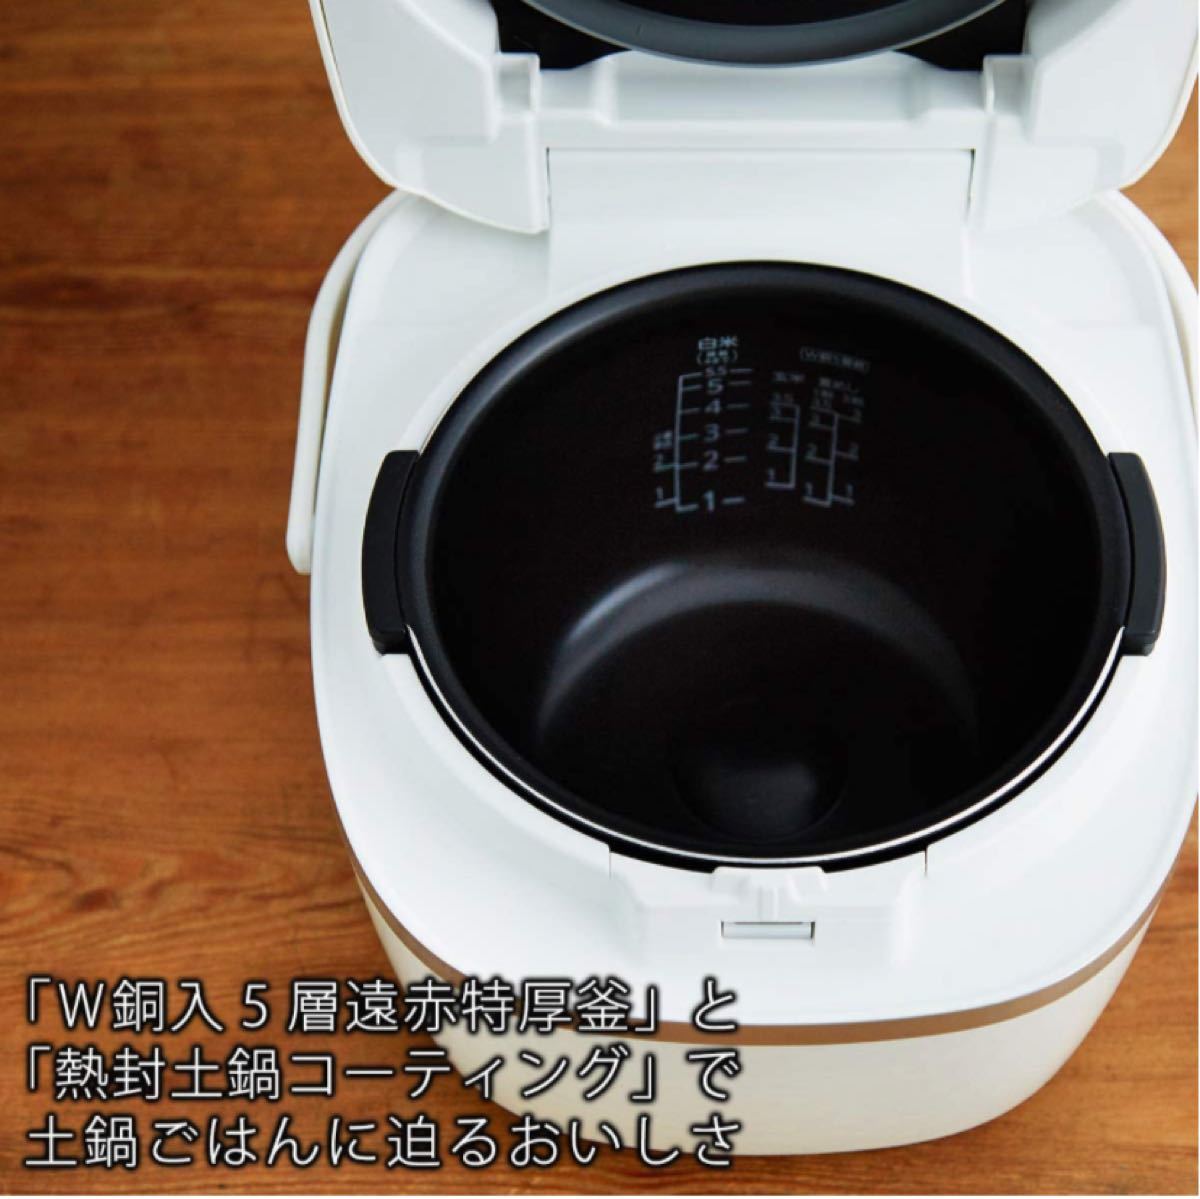 タイガー魔法瓶 2019年製 IH炊飯器 炊飯器 厚釜 JPE-A100-W 炊飯ジャー